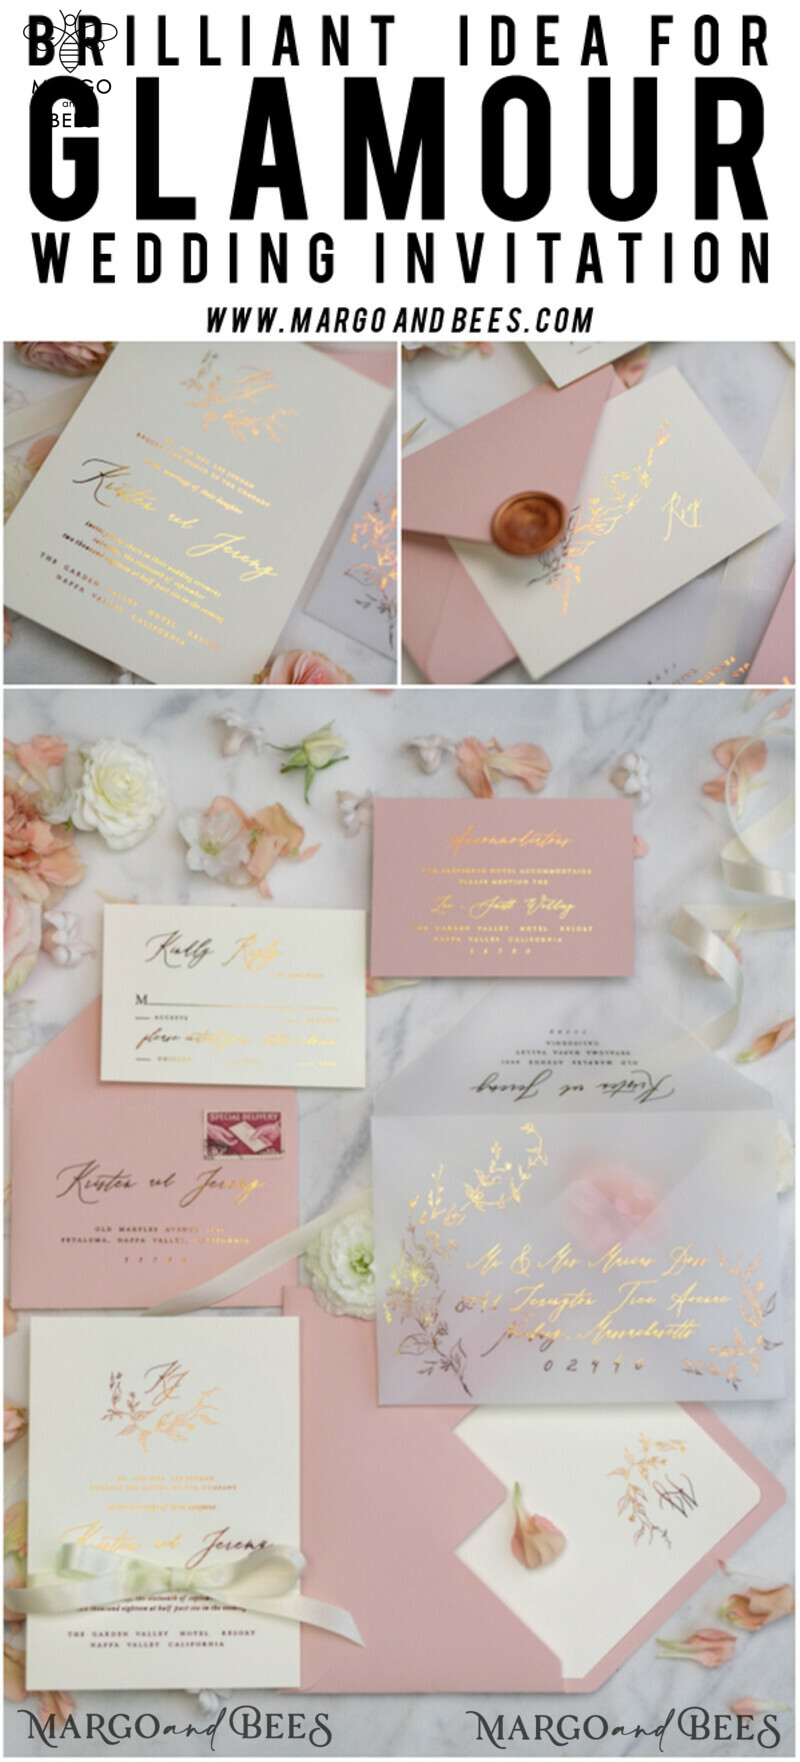 Bespoke Vellum Wedding Invitation Suite: Romantic Blush Pink and Glamour Gold Foil for an Elegant Golden Wedding-42